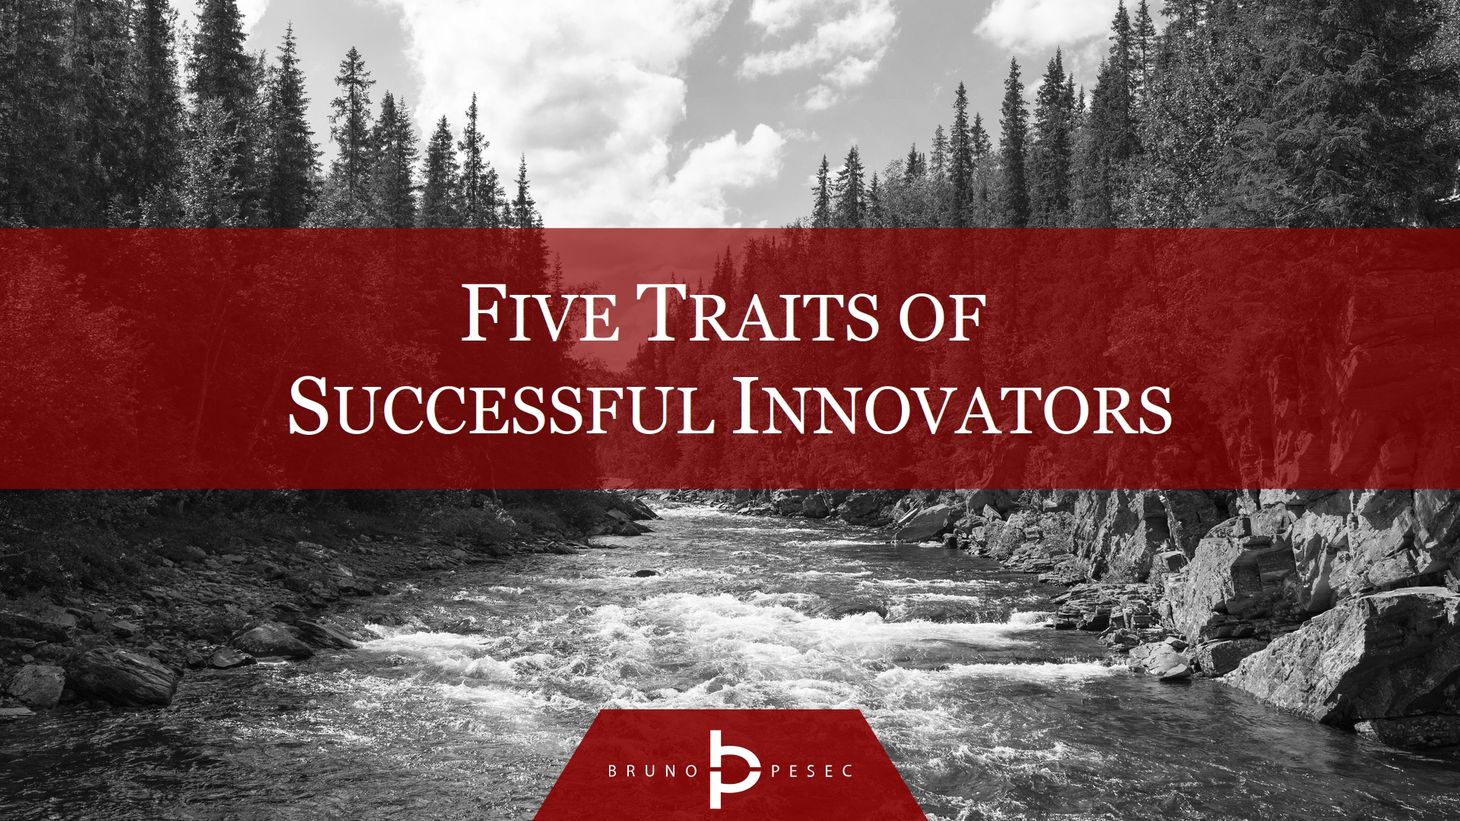 Five traits of successful innovators